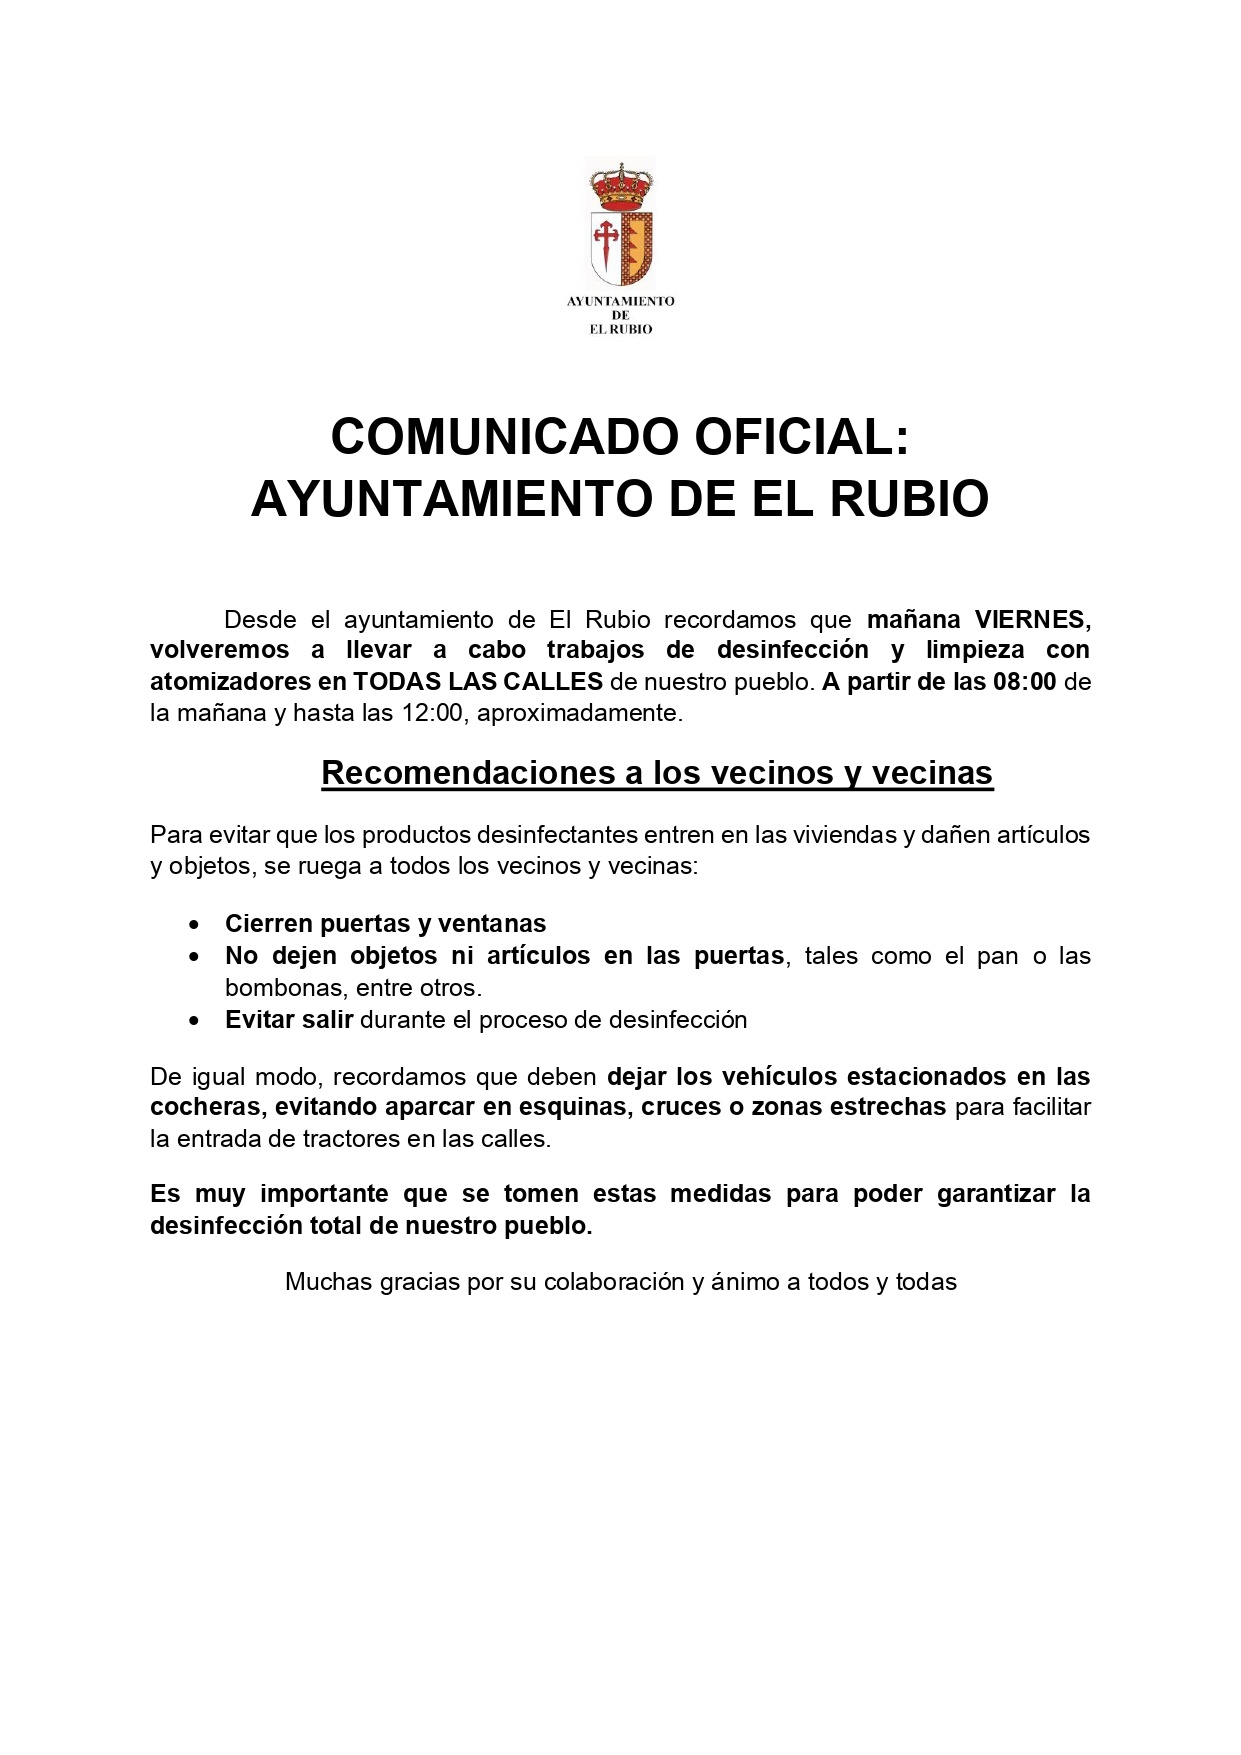 6.-COMUNICADO OFICIAL AYTO RUBIO 09-04-20_page-0001